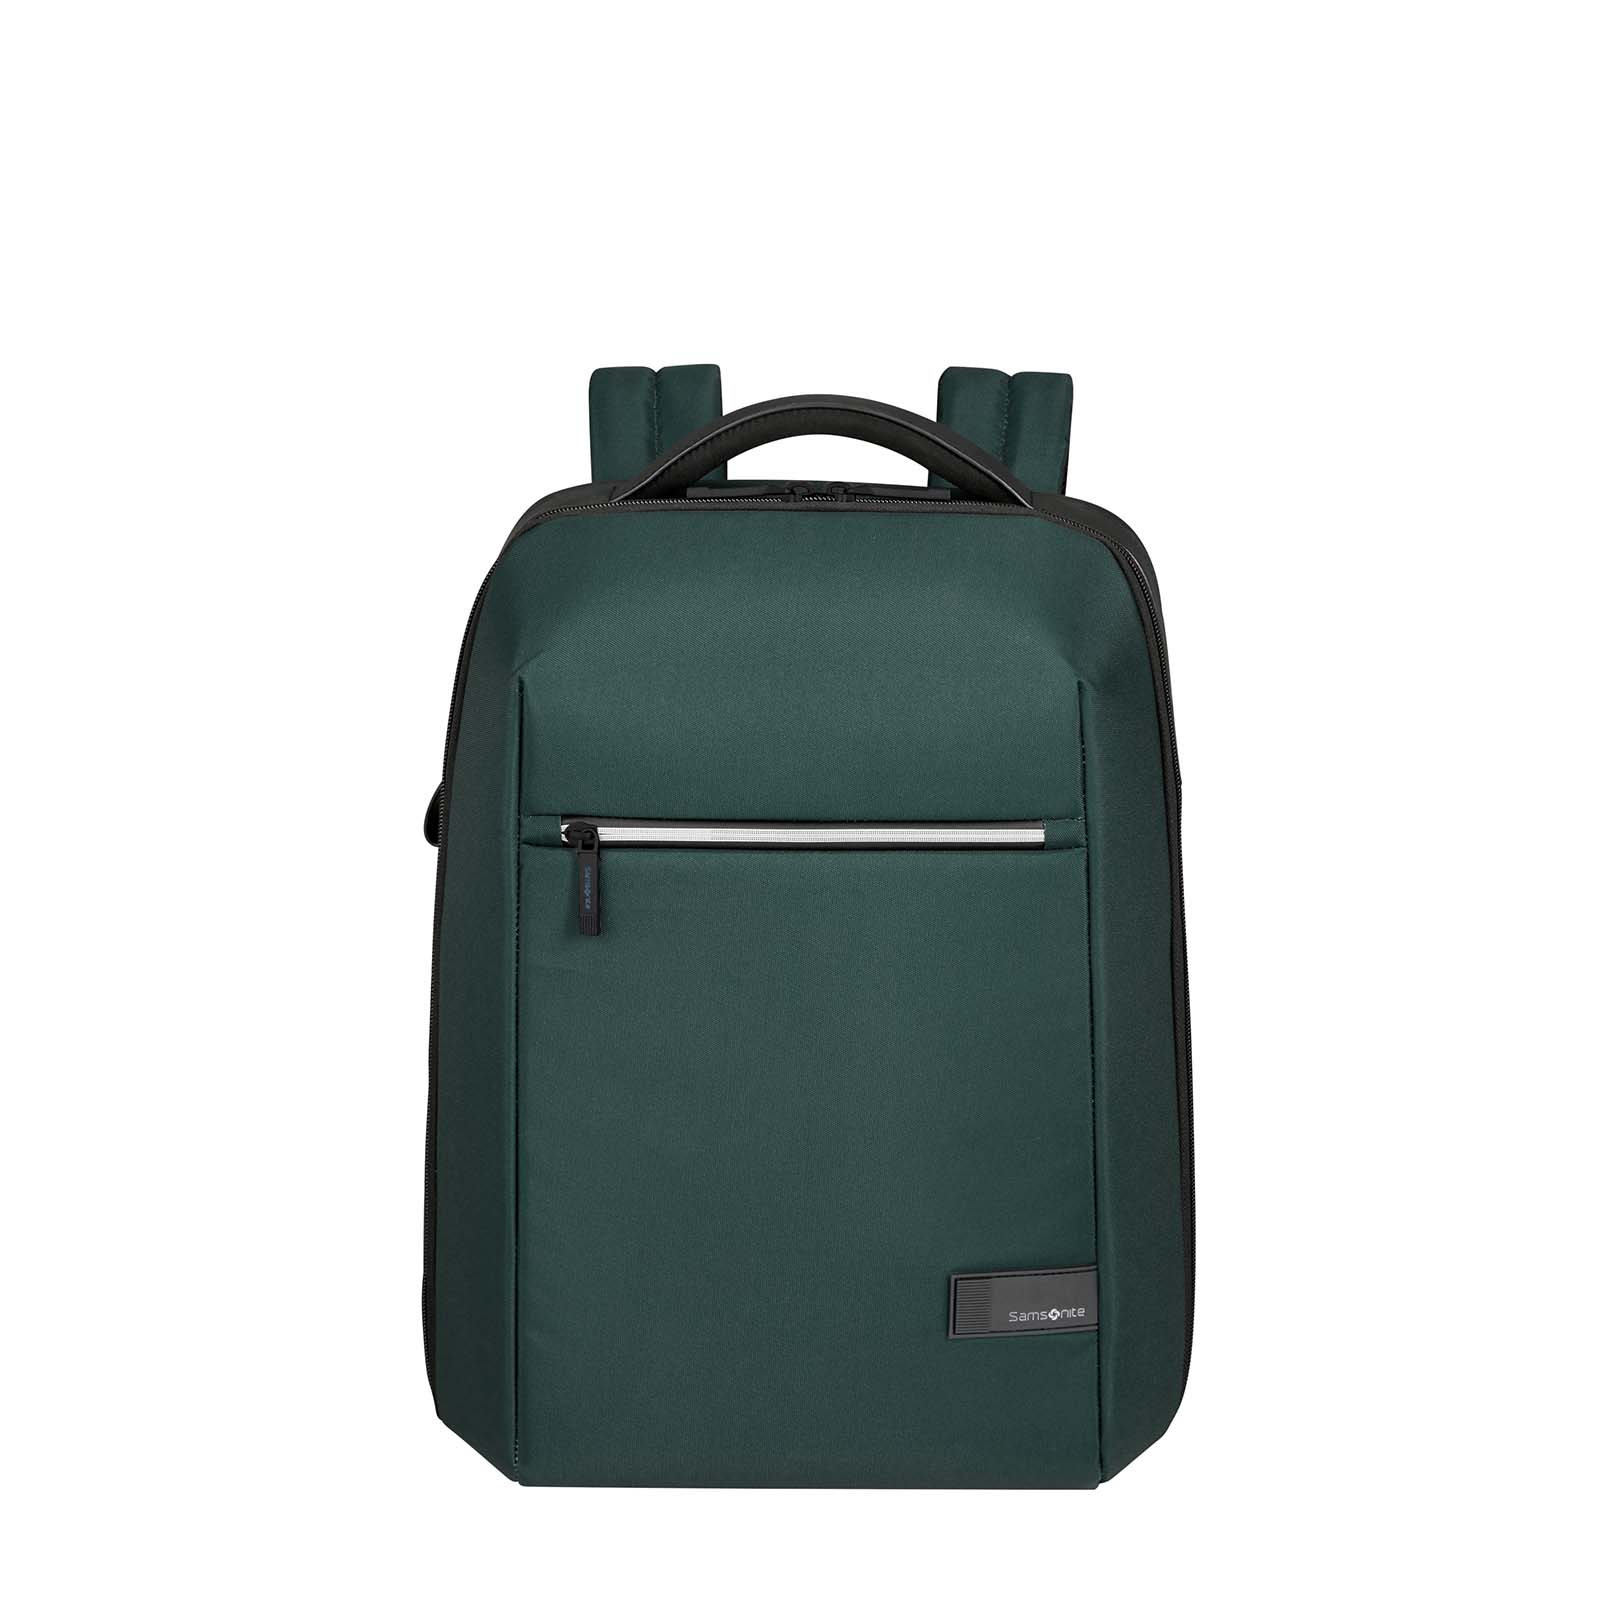 Samsonite-Litepoint-15-Inch-Laptop-Backpack-Urban-Green-Front